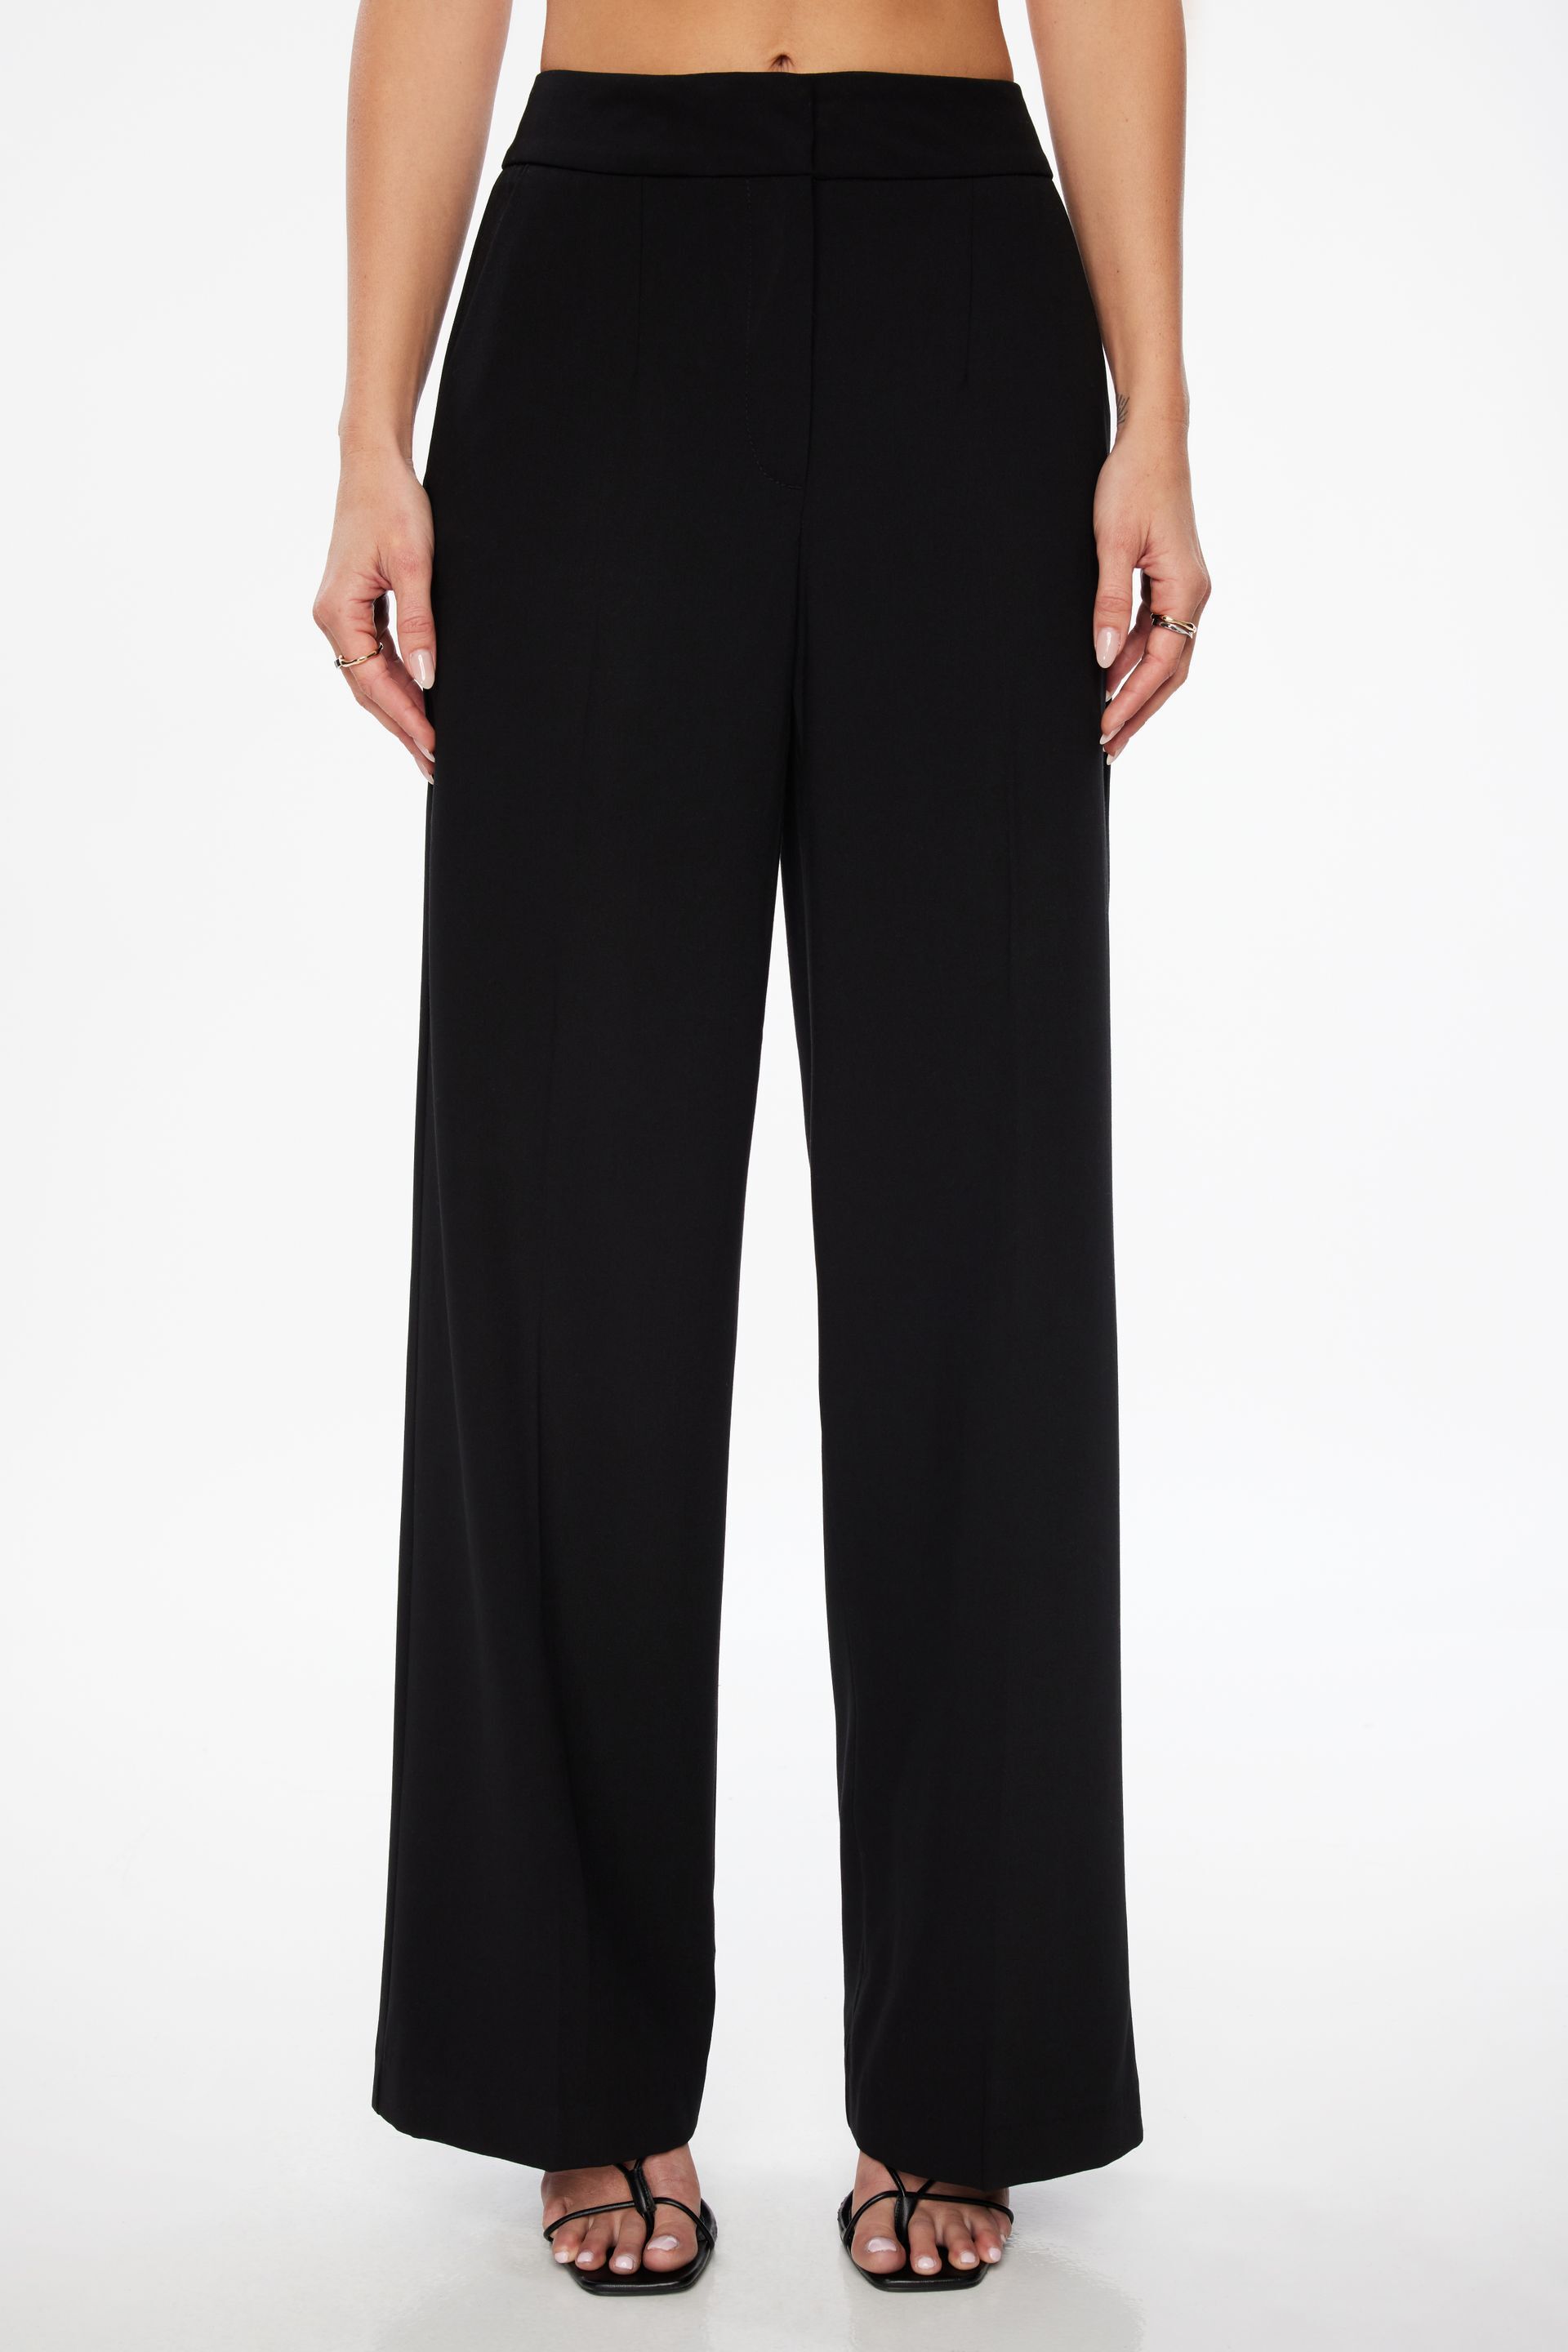 INC ~ Sz 14 ~ Dress Pants Jet Black Rayon Nylon Spandex w/ wide elastic  waist